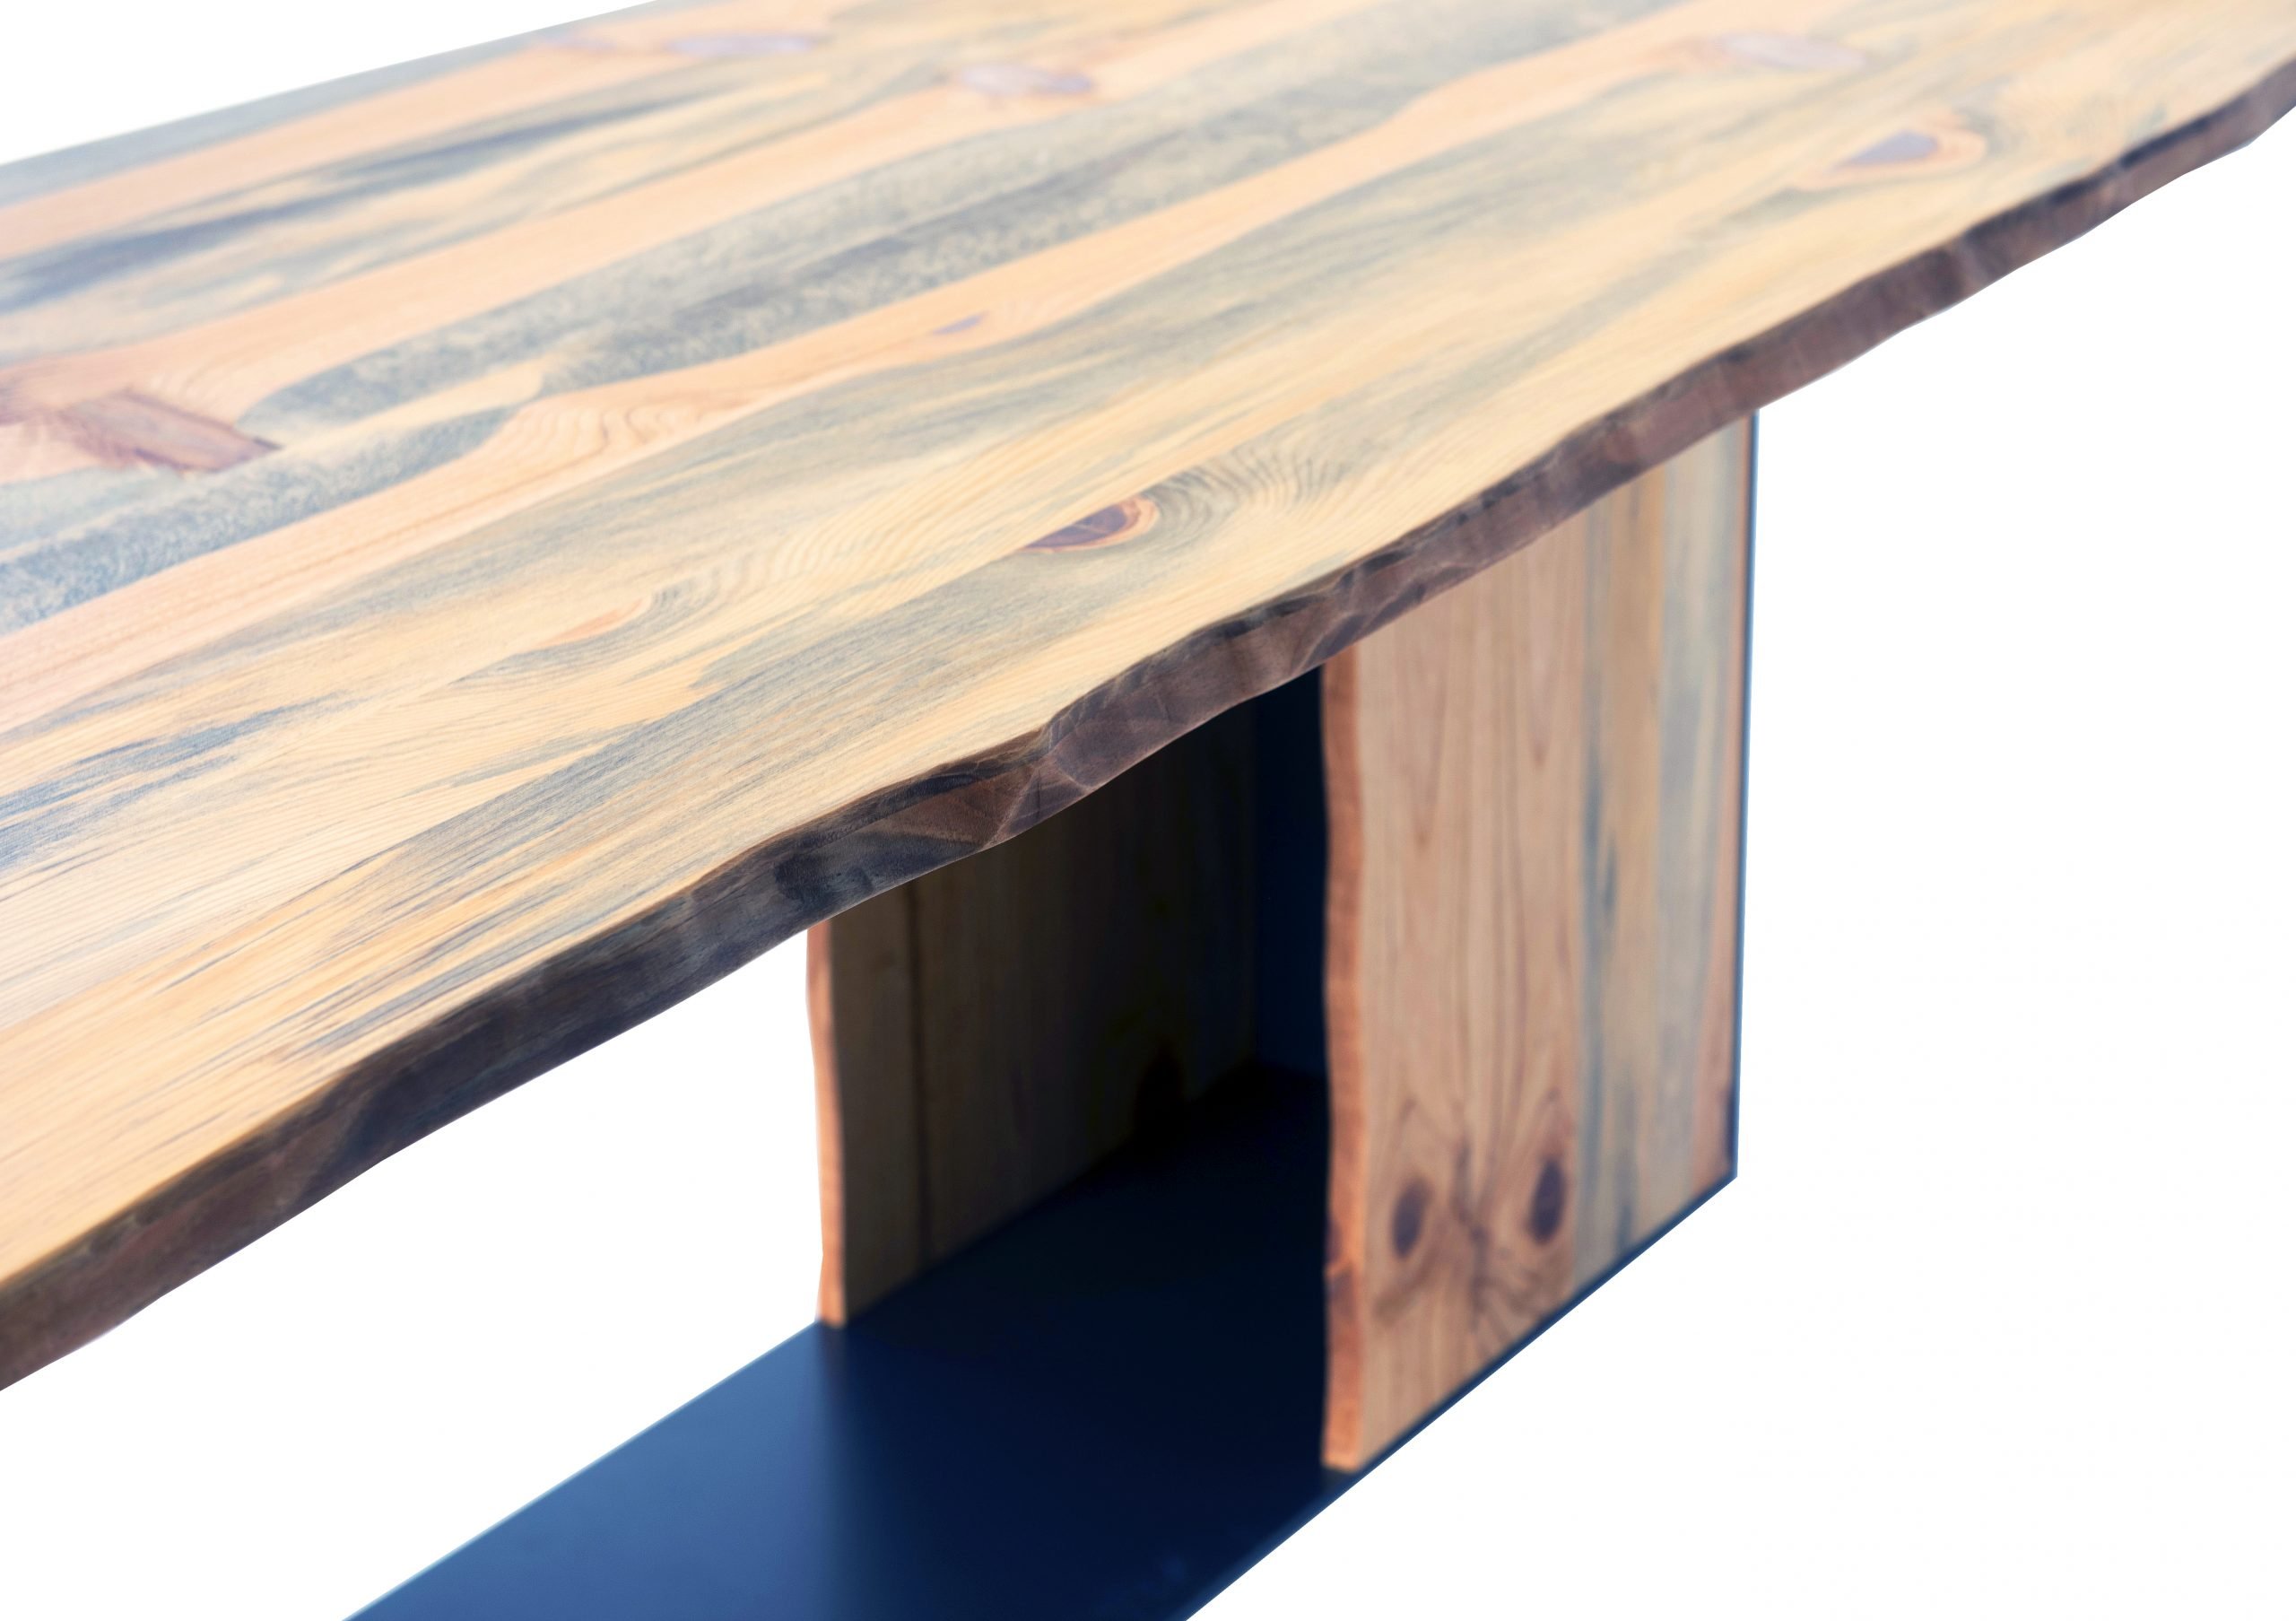 sustainable-castelo-cedar-wood-dinning-table-base-ekohunters-eco-friendly-furniture-vea-mobiliario